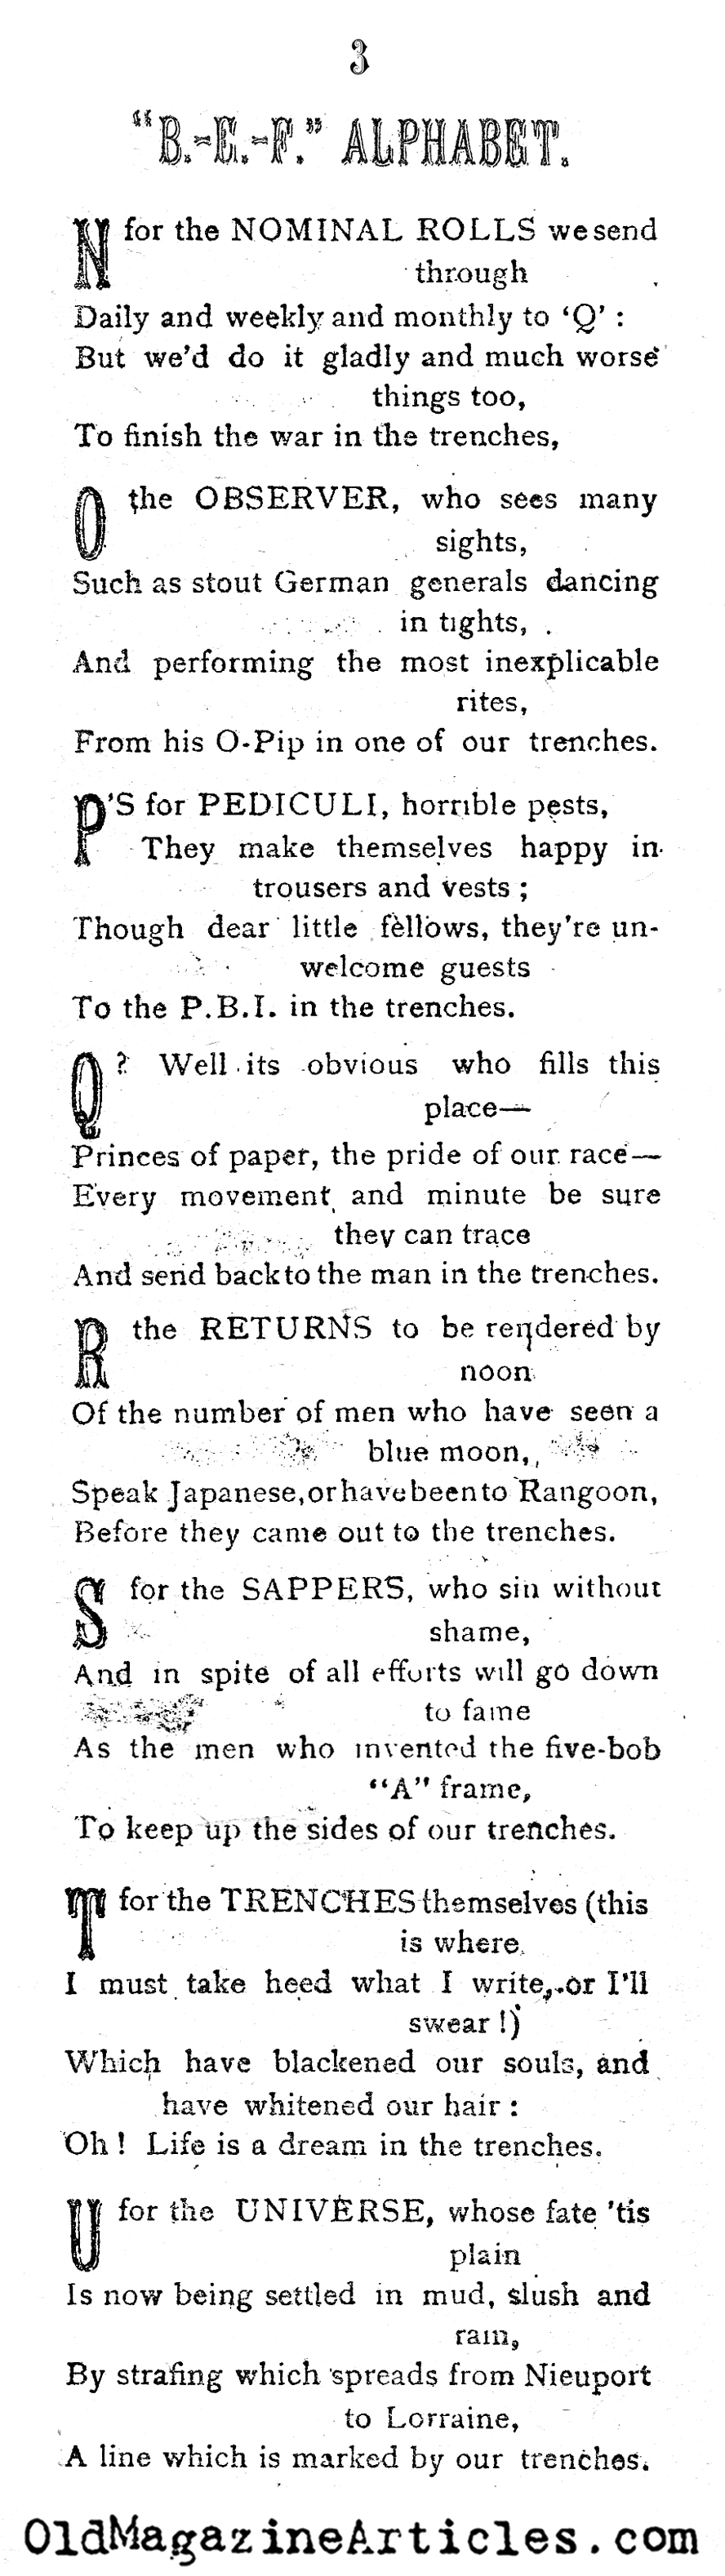 Tommy's Alphabet (The B.E.F. Times, 1917)